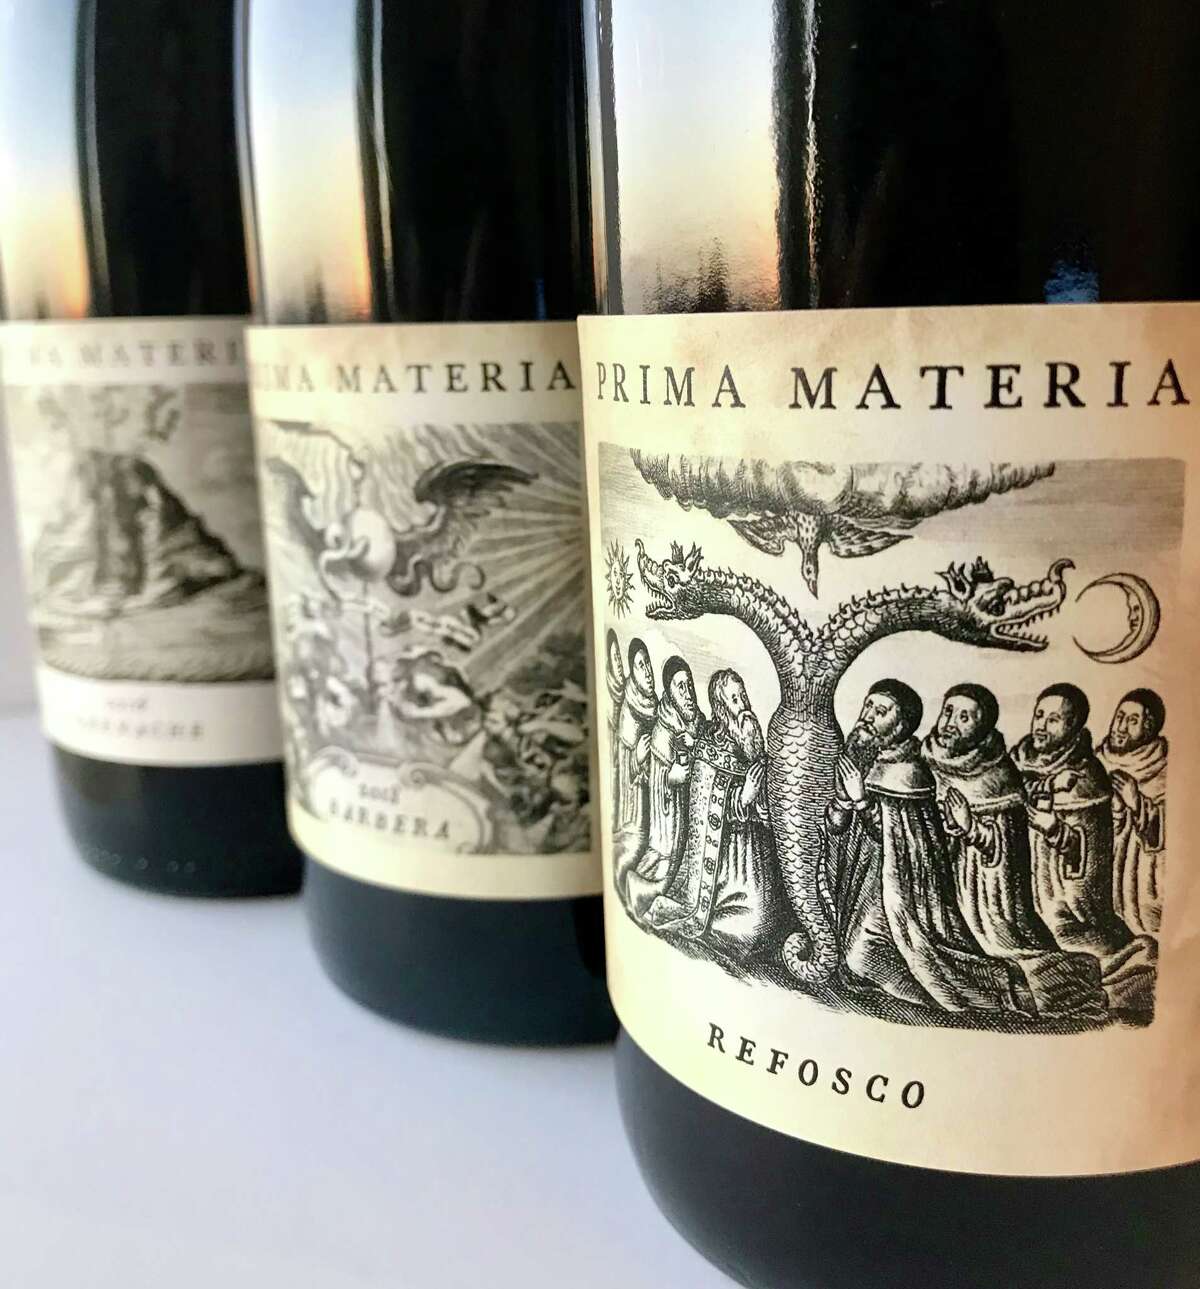 The Prima Materia wines are mostly made from Italian grape varieties like Refosco, Barbera, Aglianico and Sagrantino.